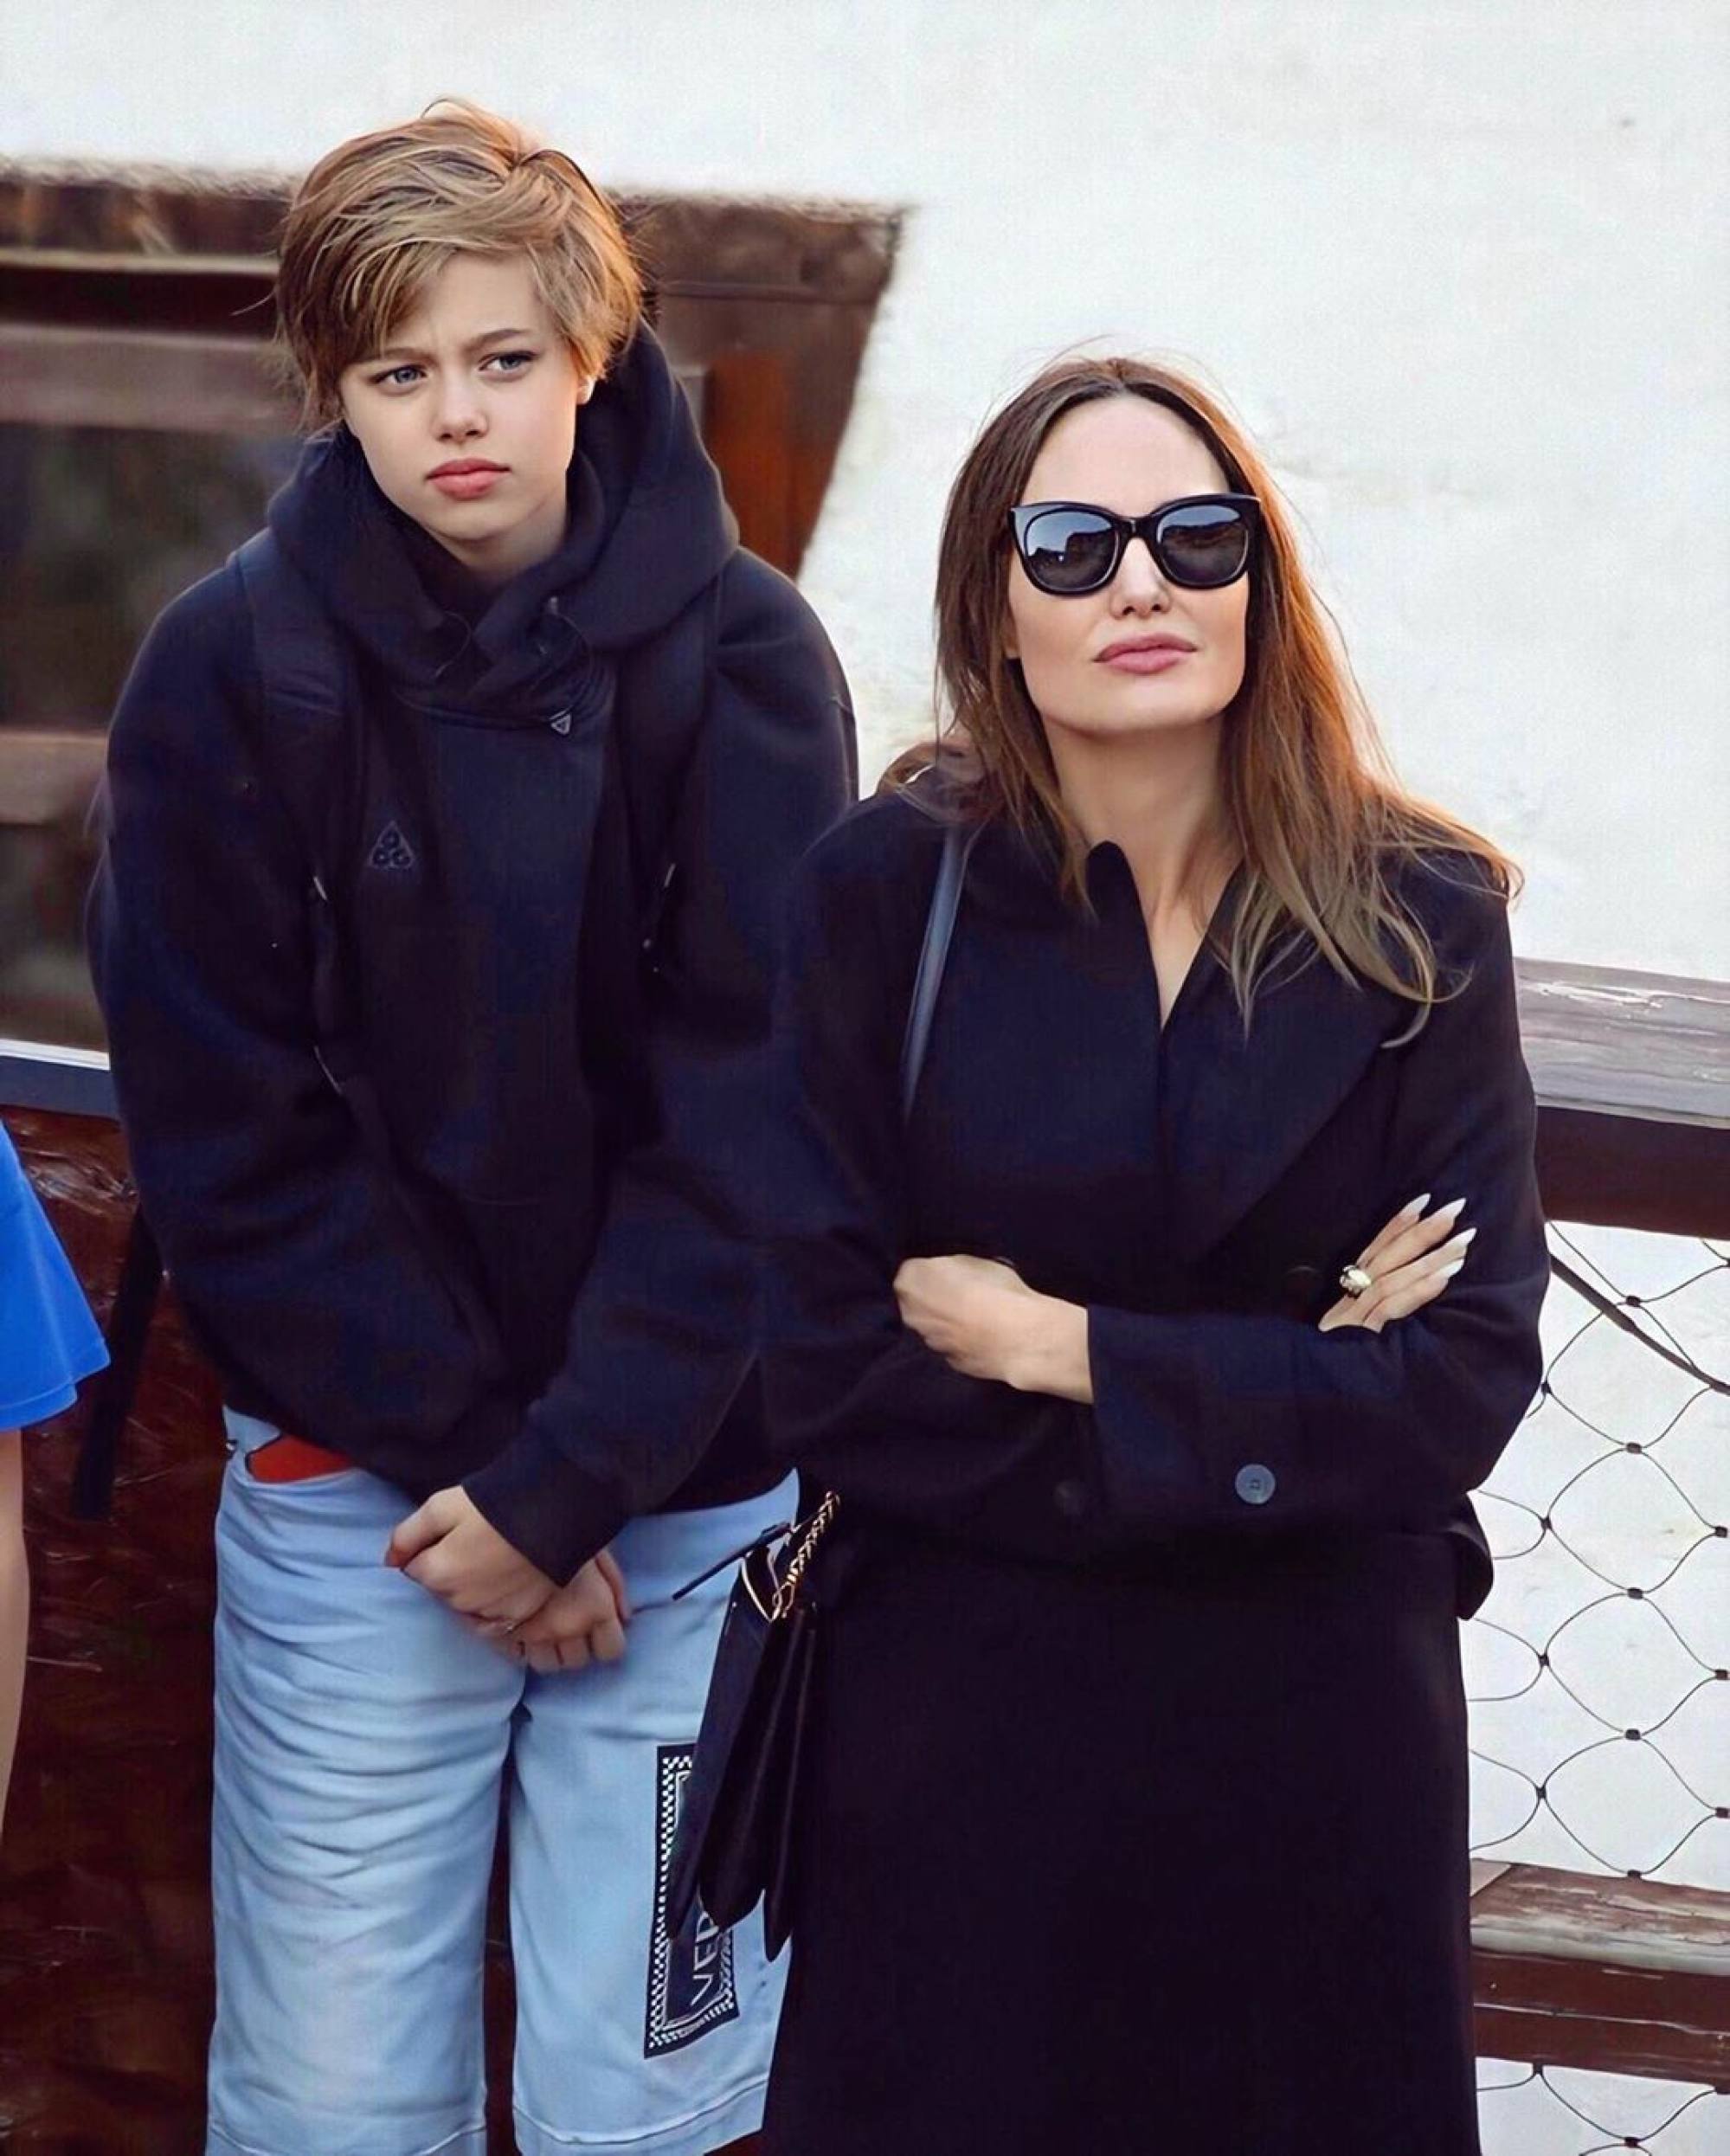 Is Shiloh Jolie-Pitt the next Angelina Jolie? 8 similarities between ...